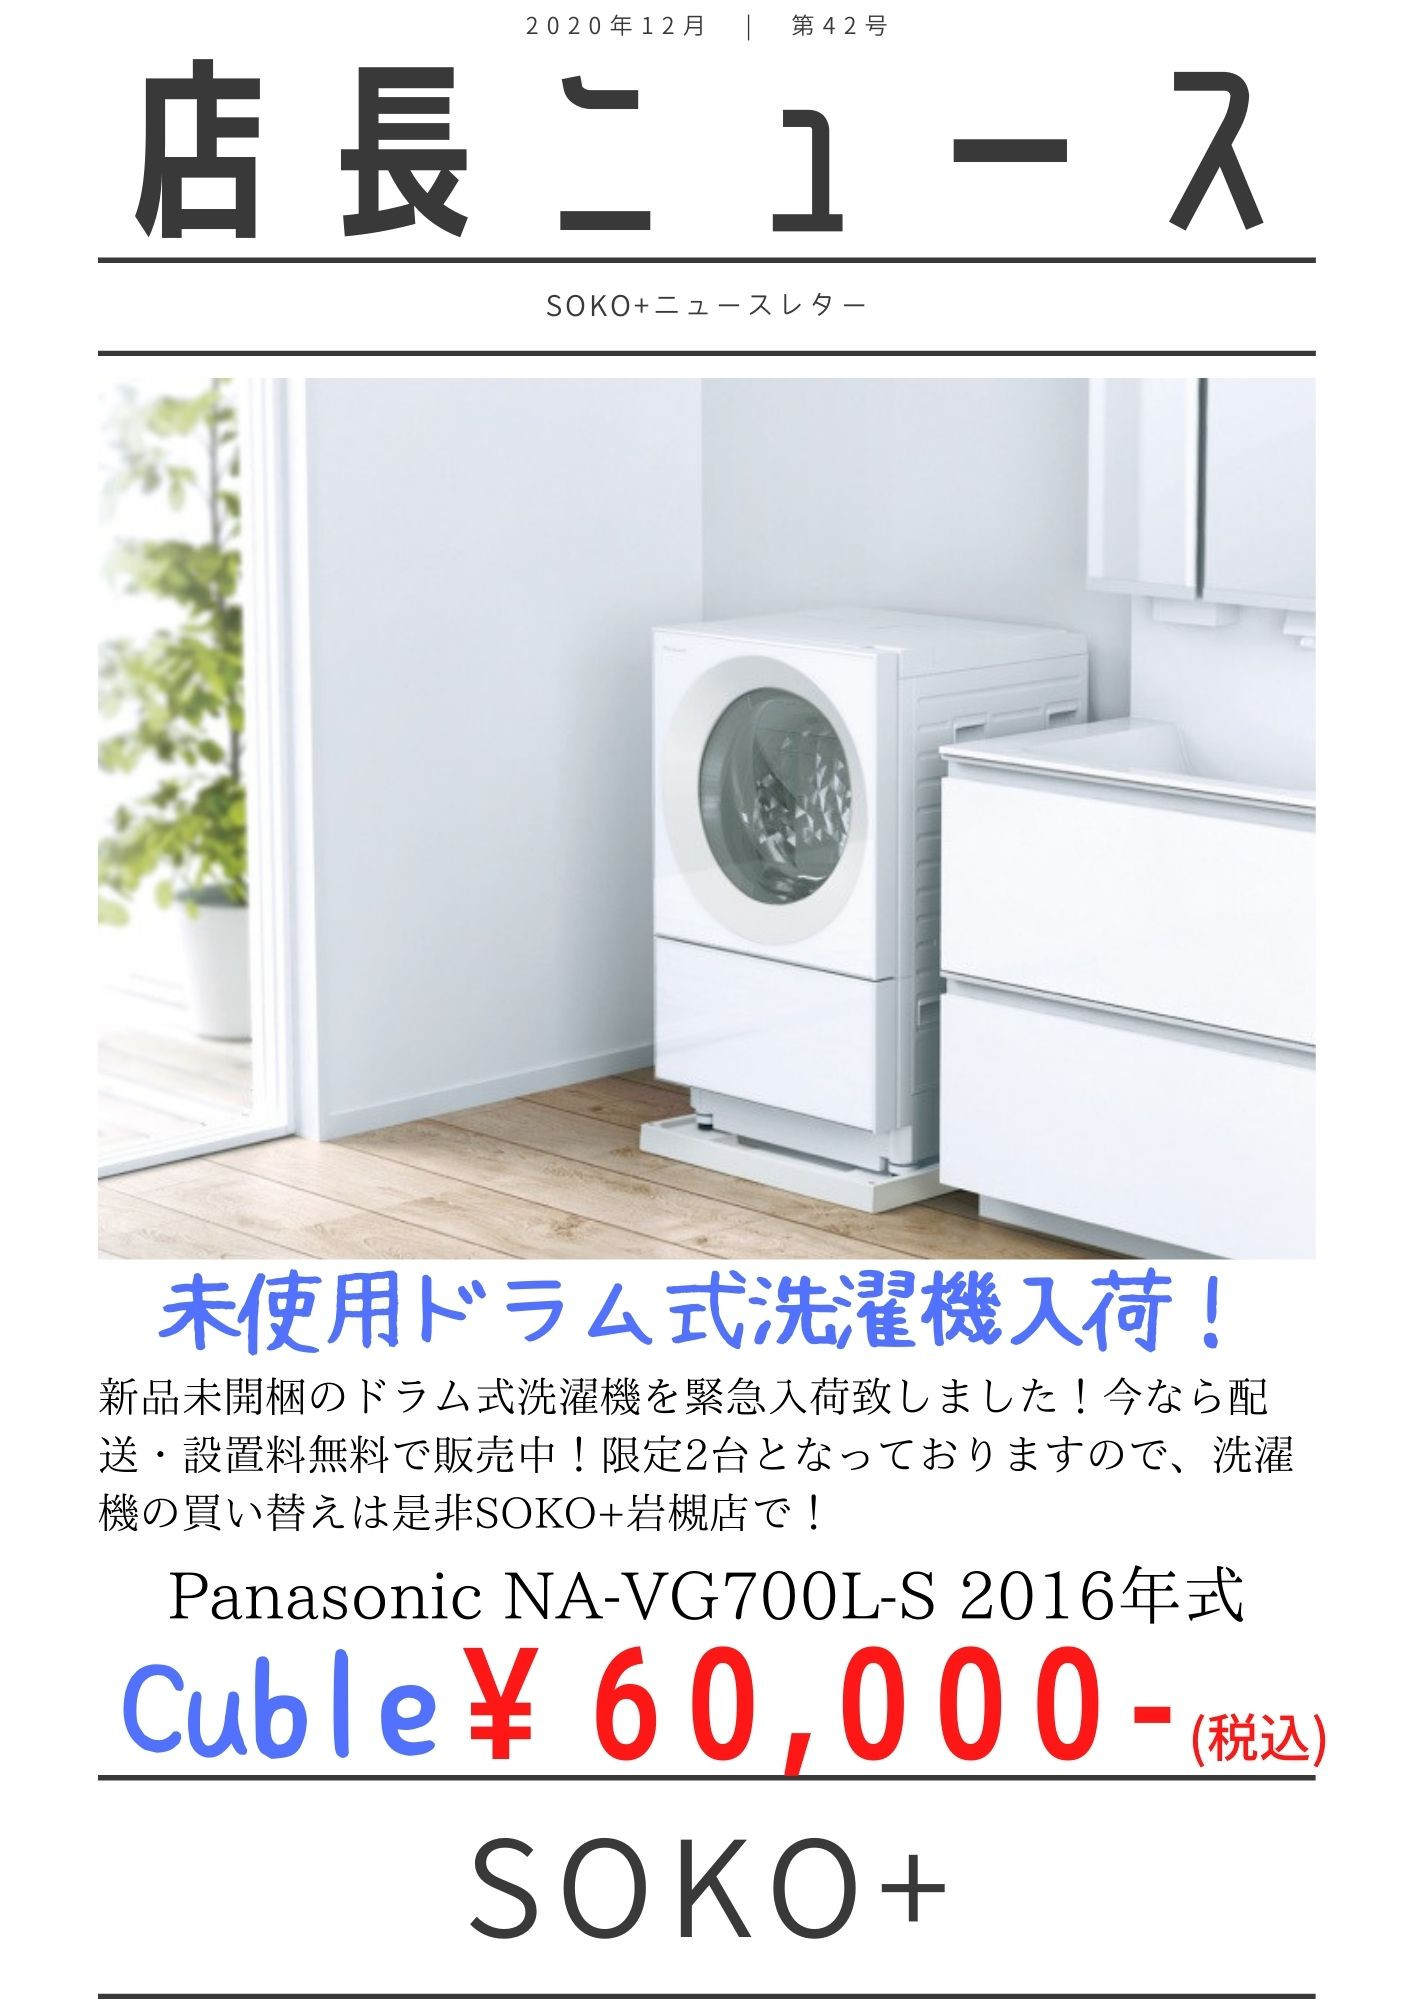 Panasonic パナソニック ドラム式 NA-VG700L 2016年製 - 洗濯機